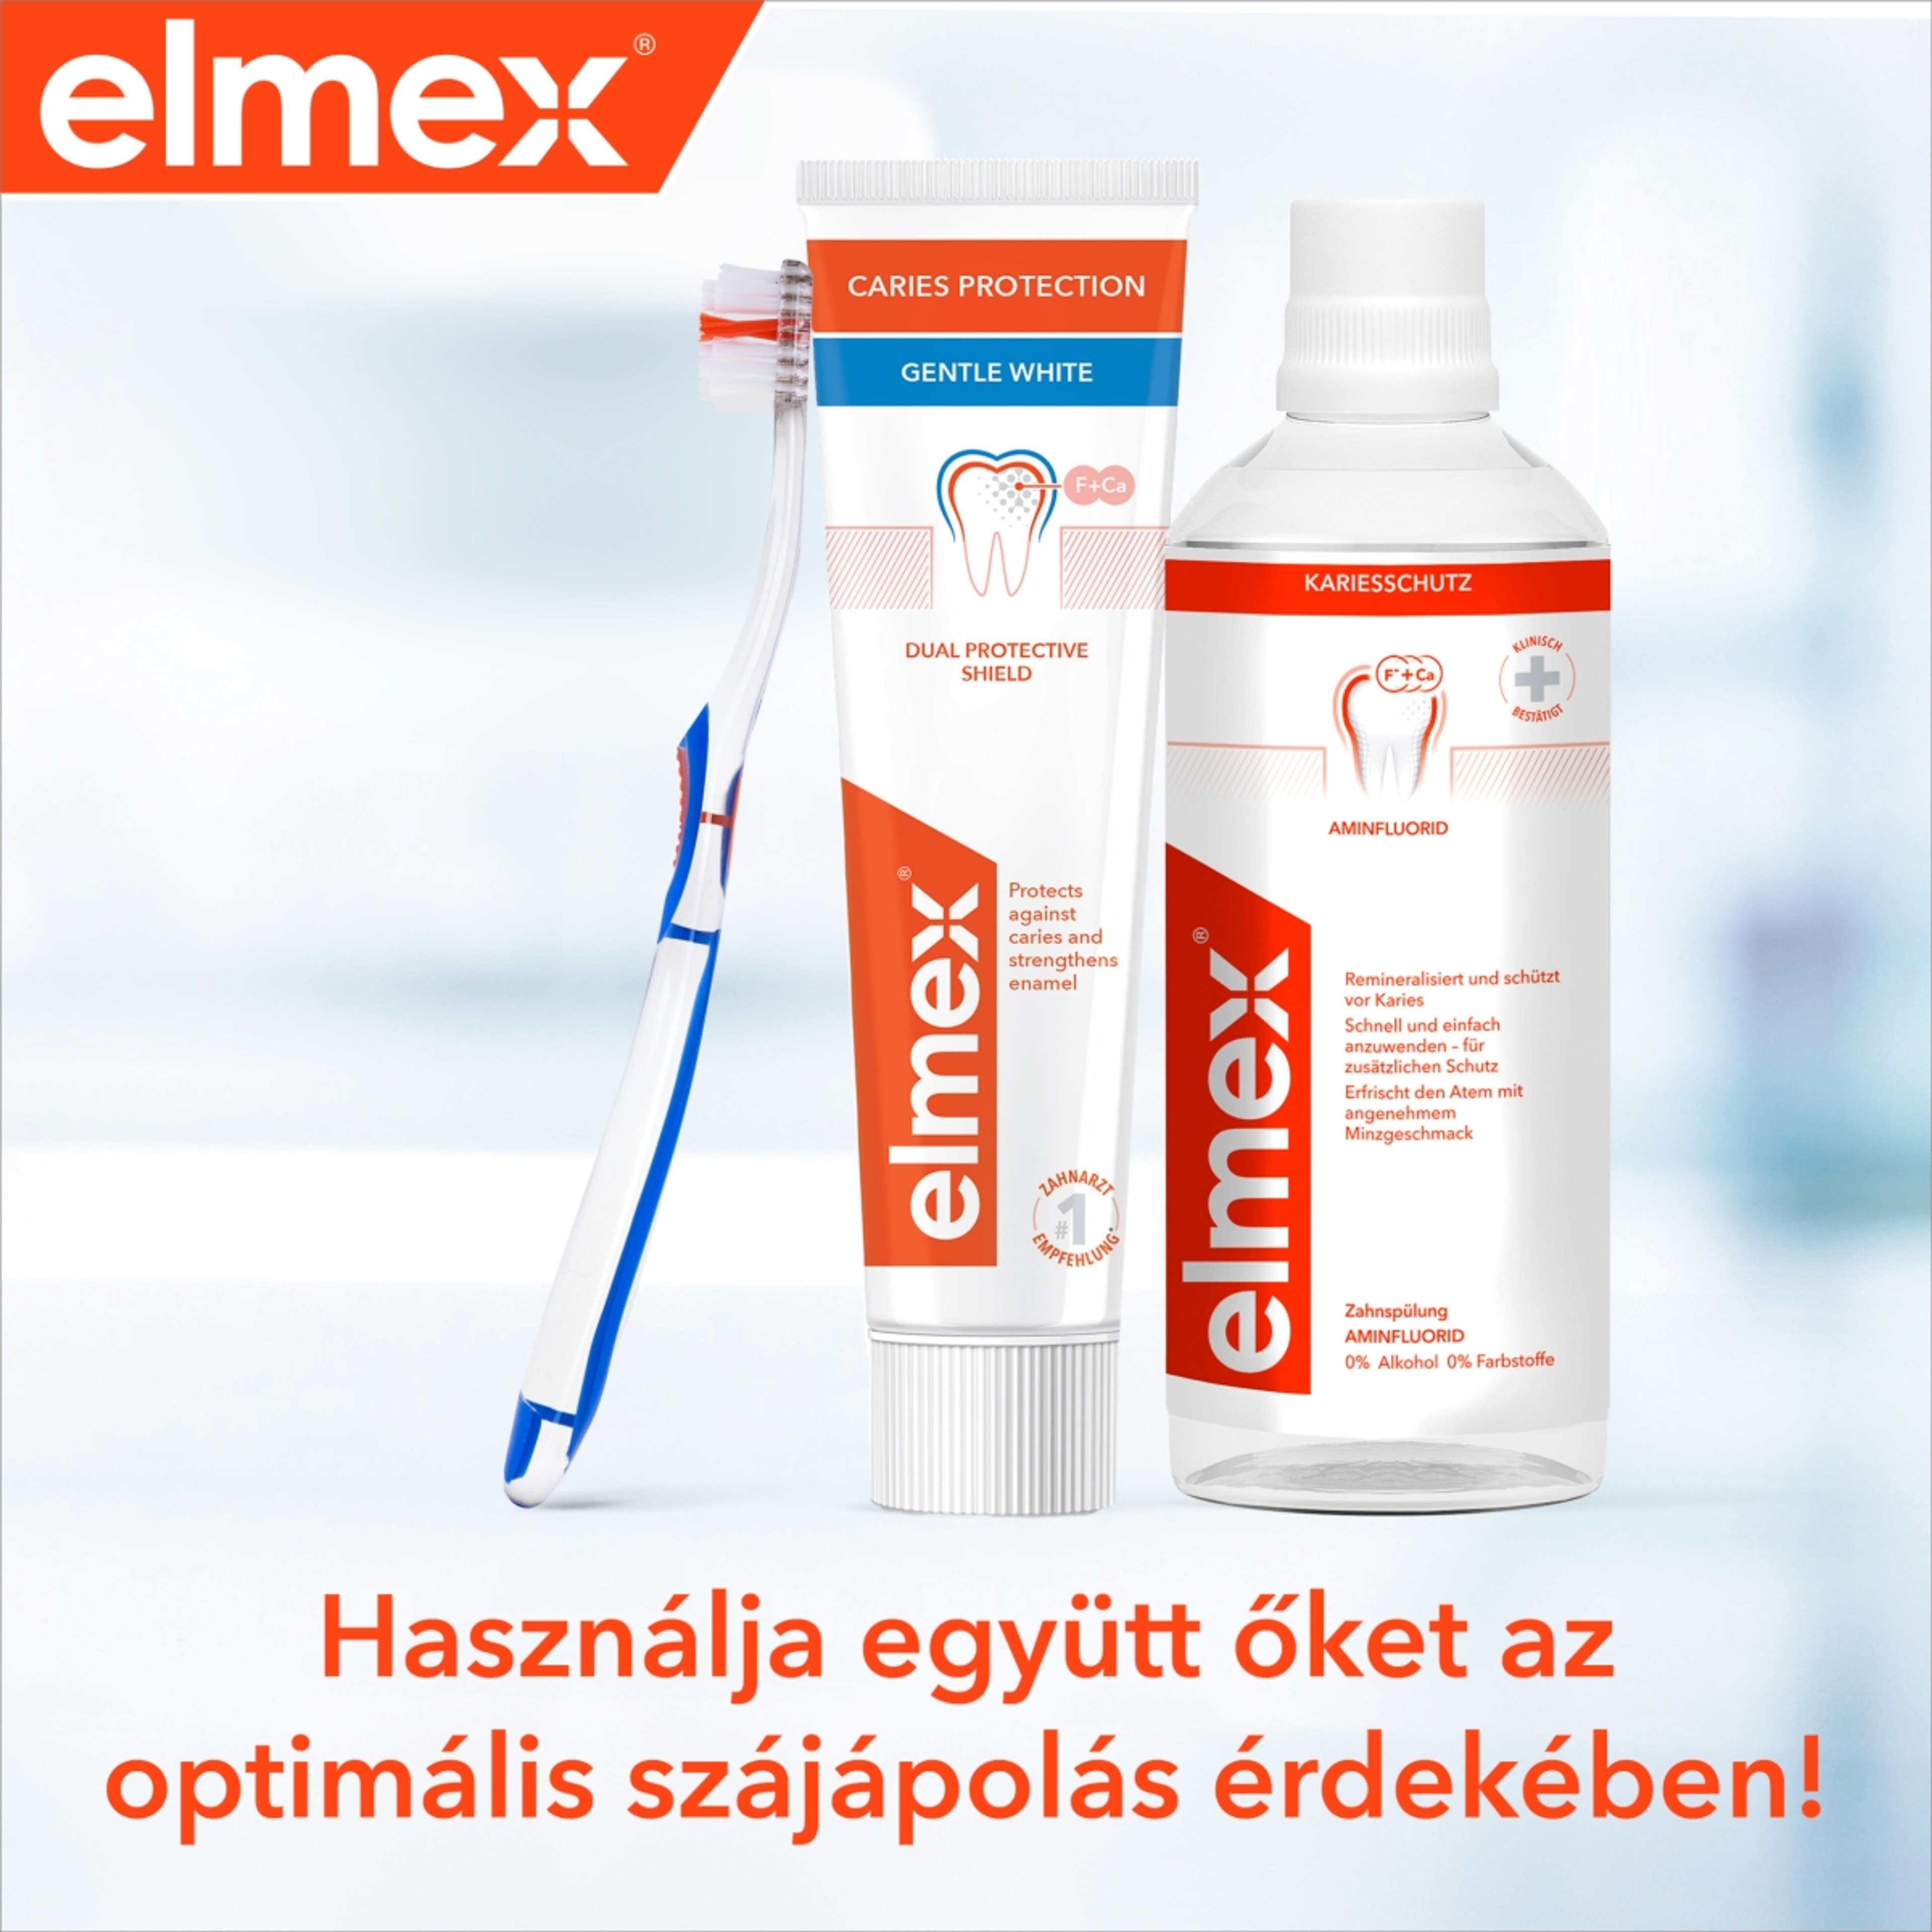 Elmex Caries Protection Whitening fogkrém - 75 ml-8